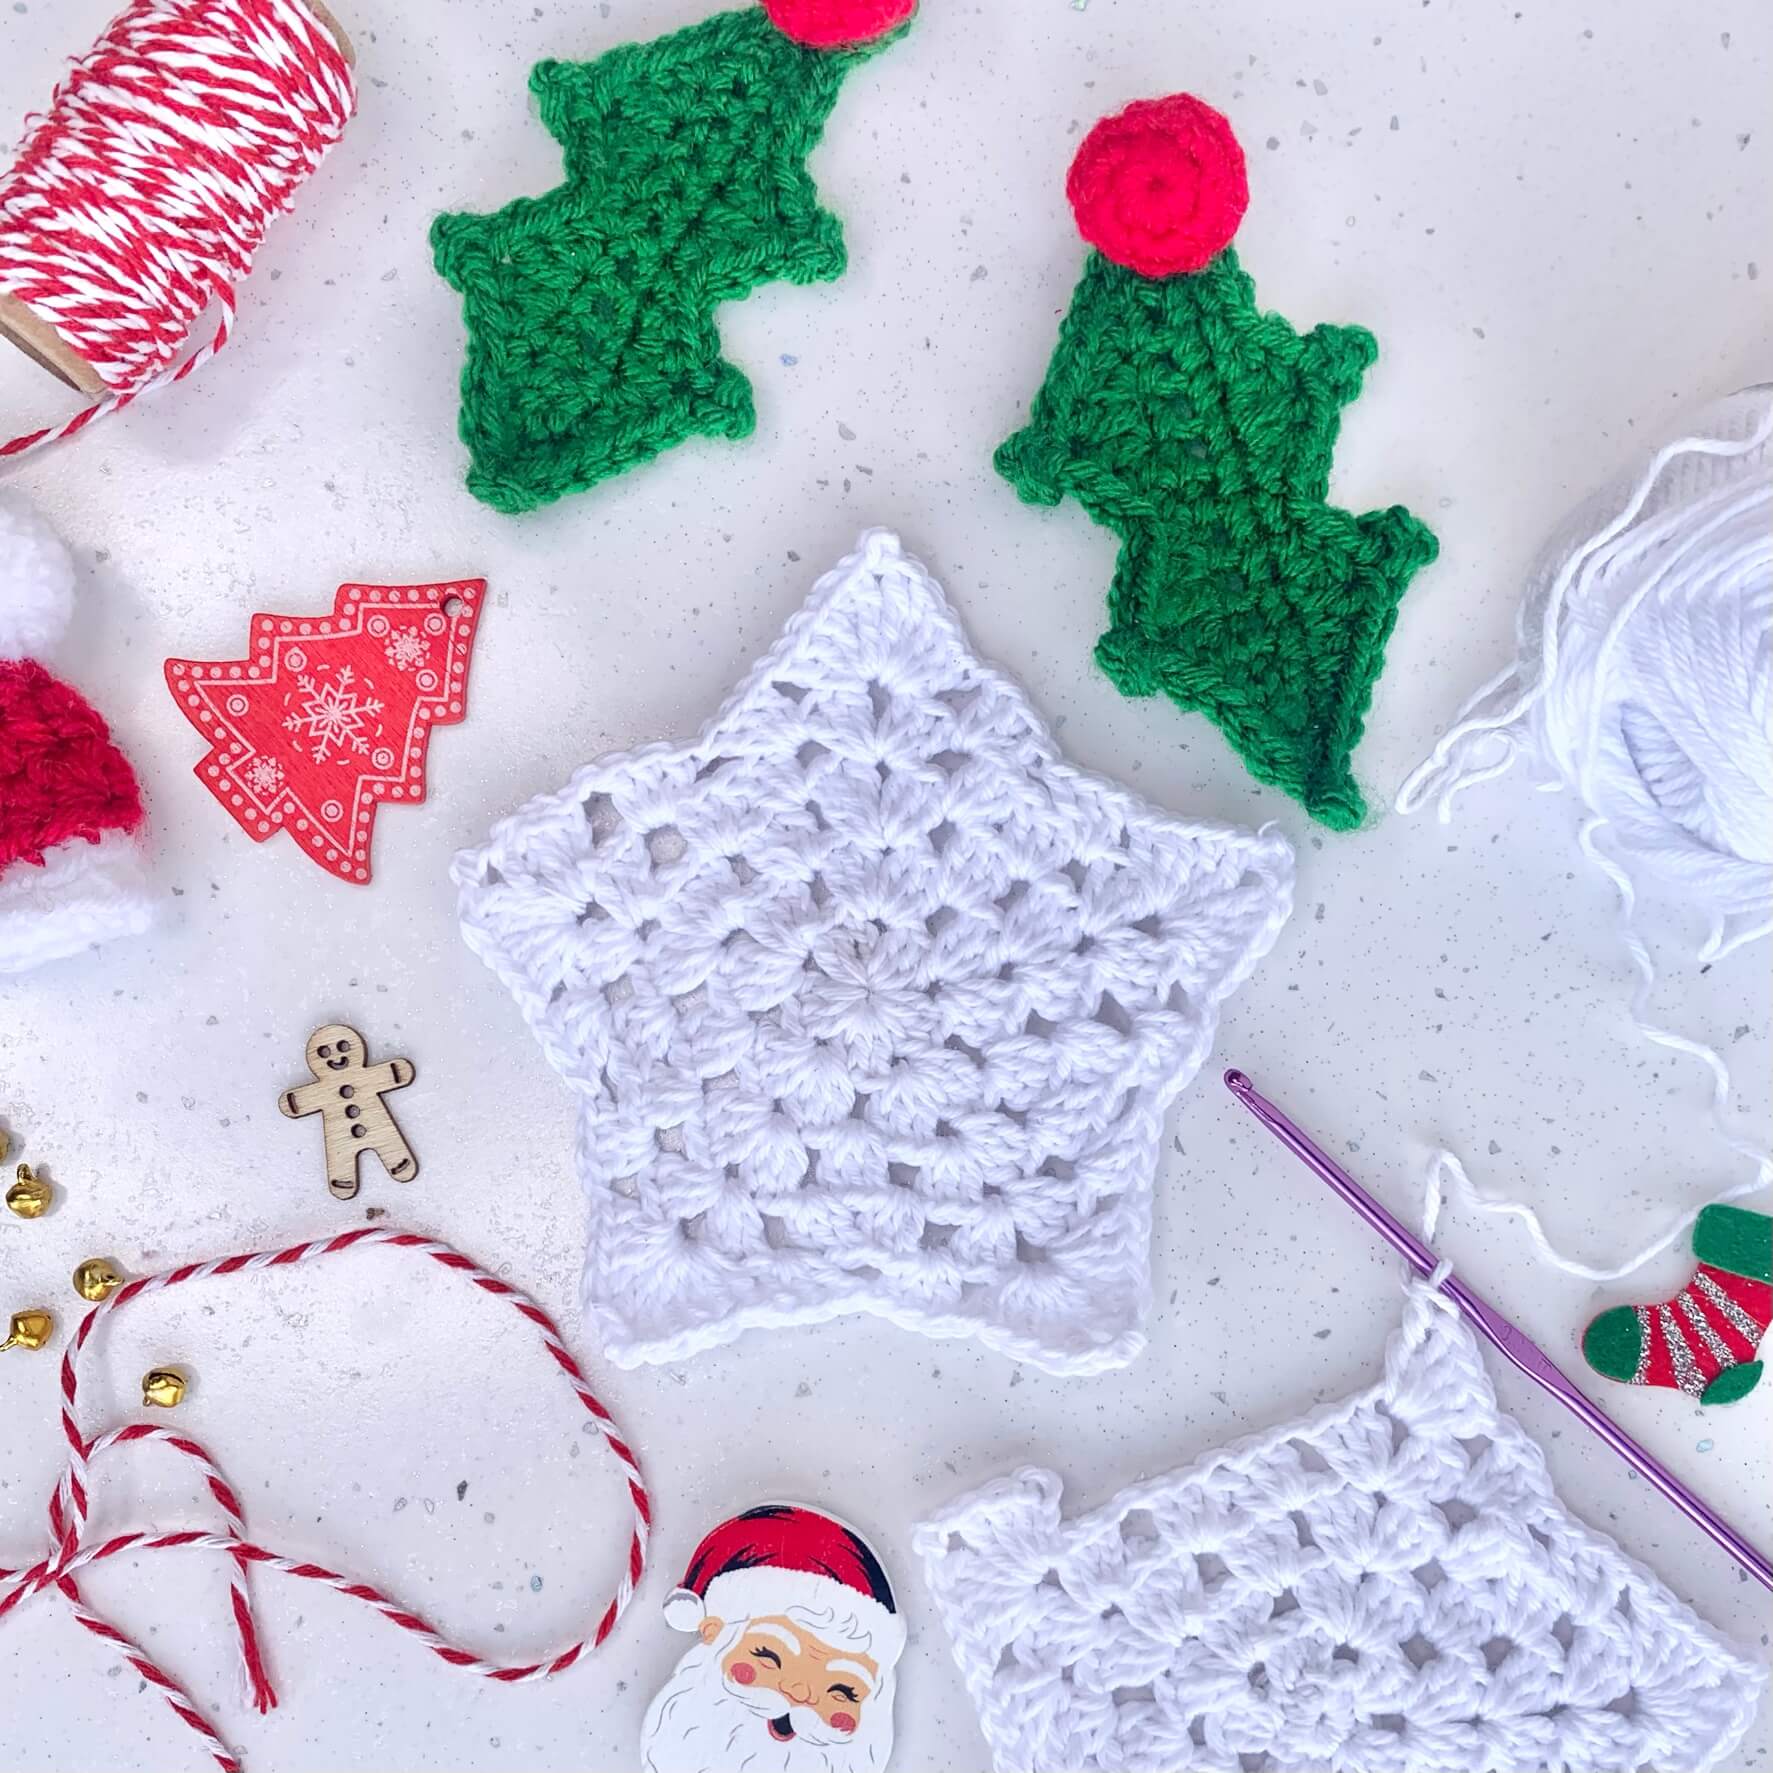 How to crochet granny star pattern